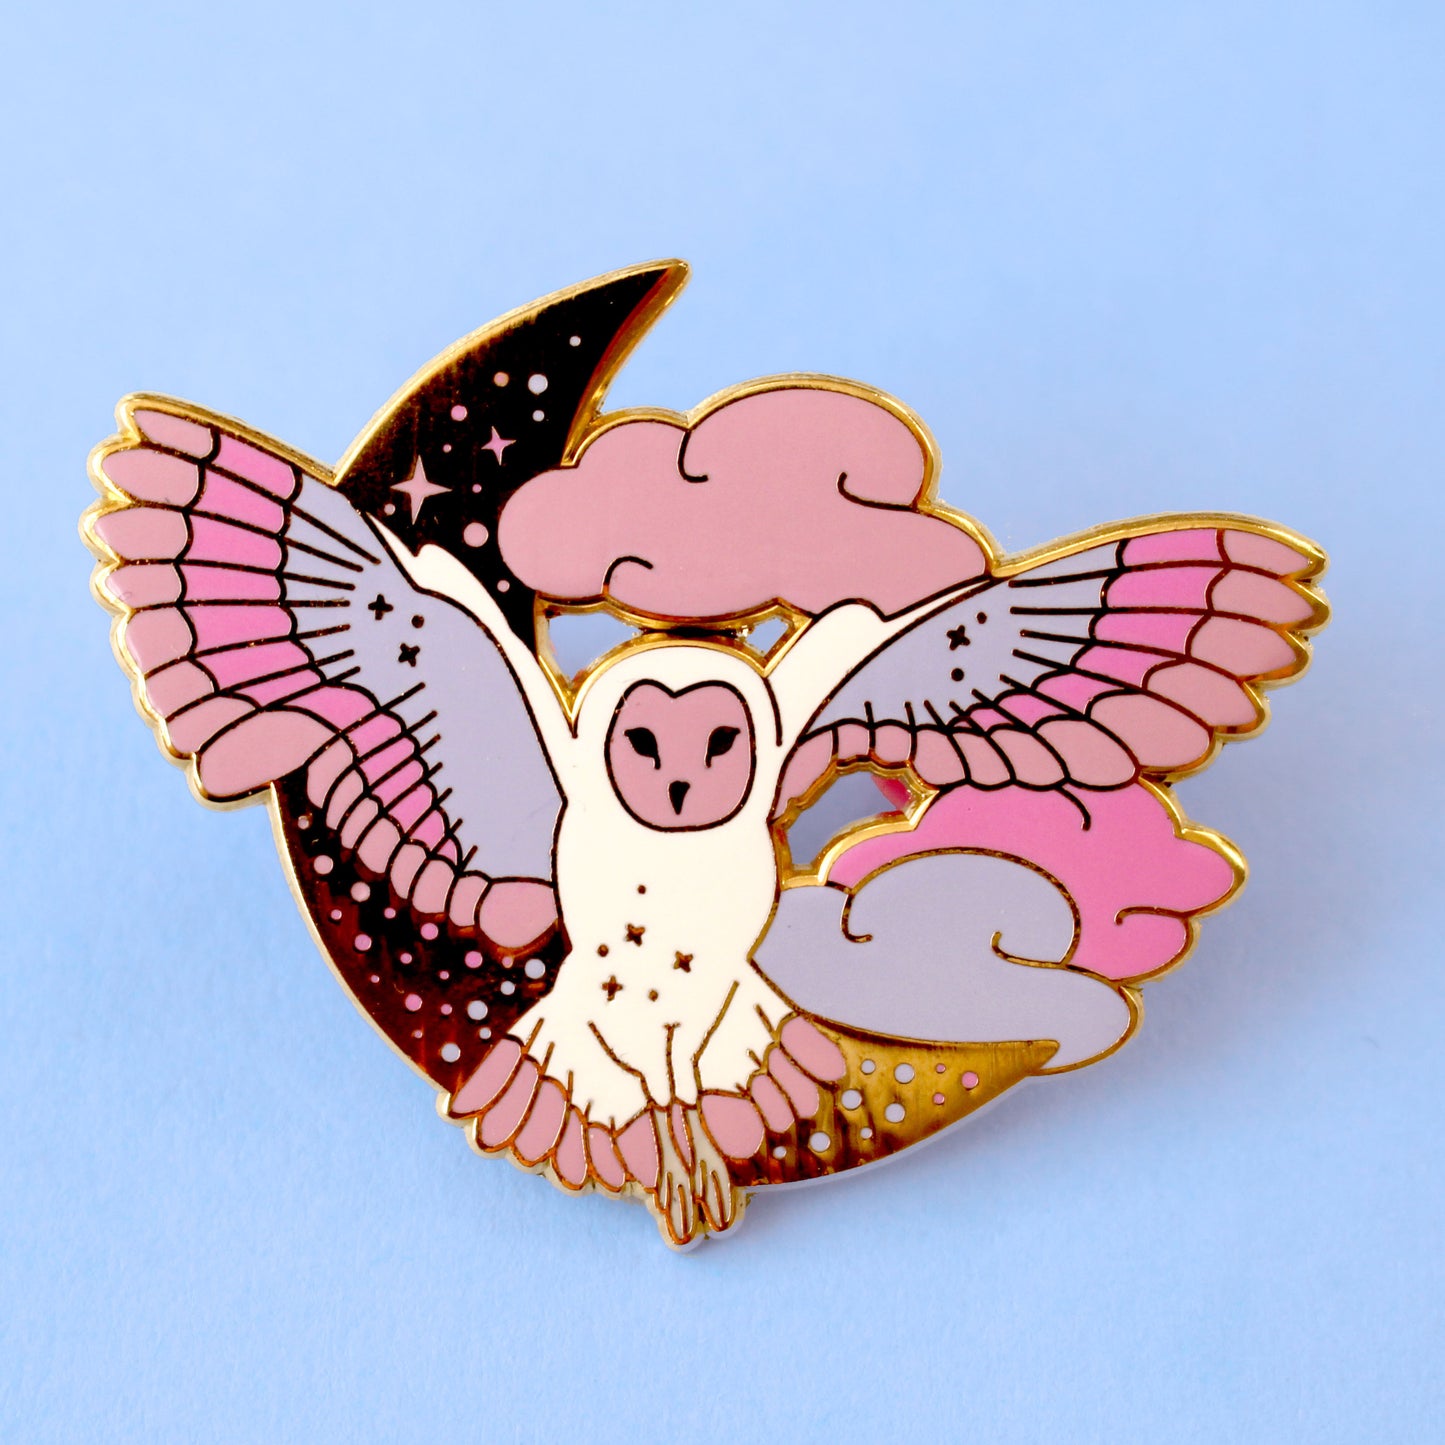 The Midnight Owl enamel pin